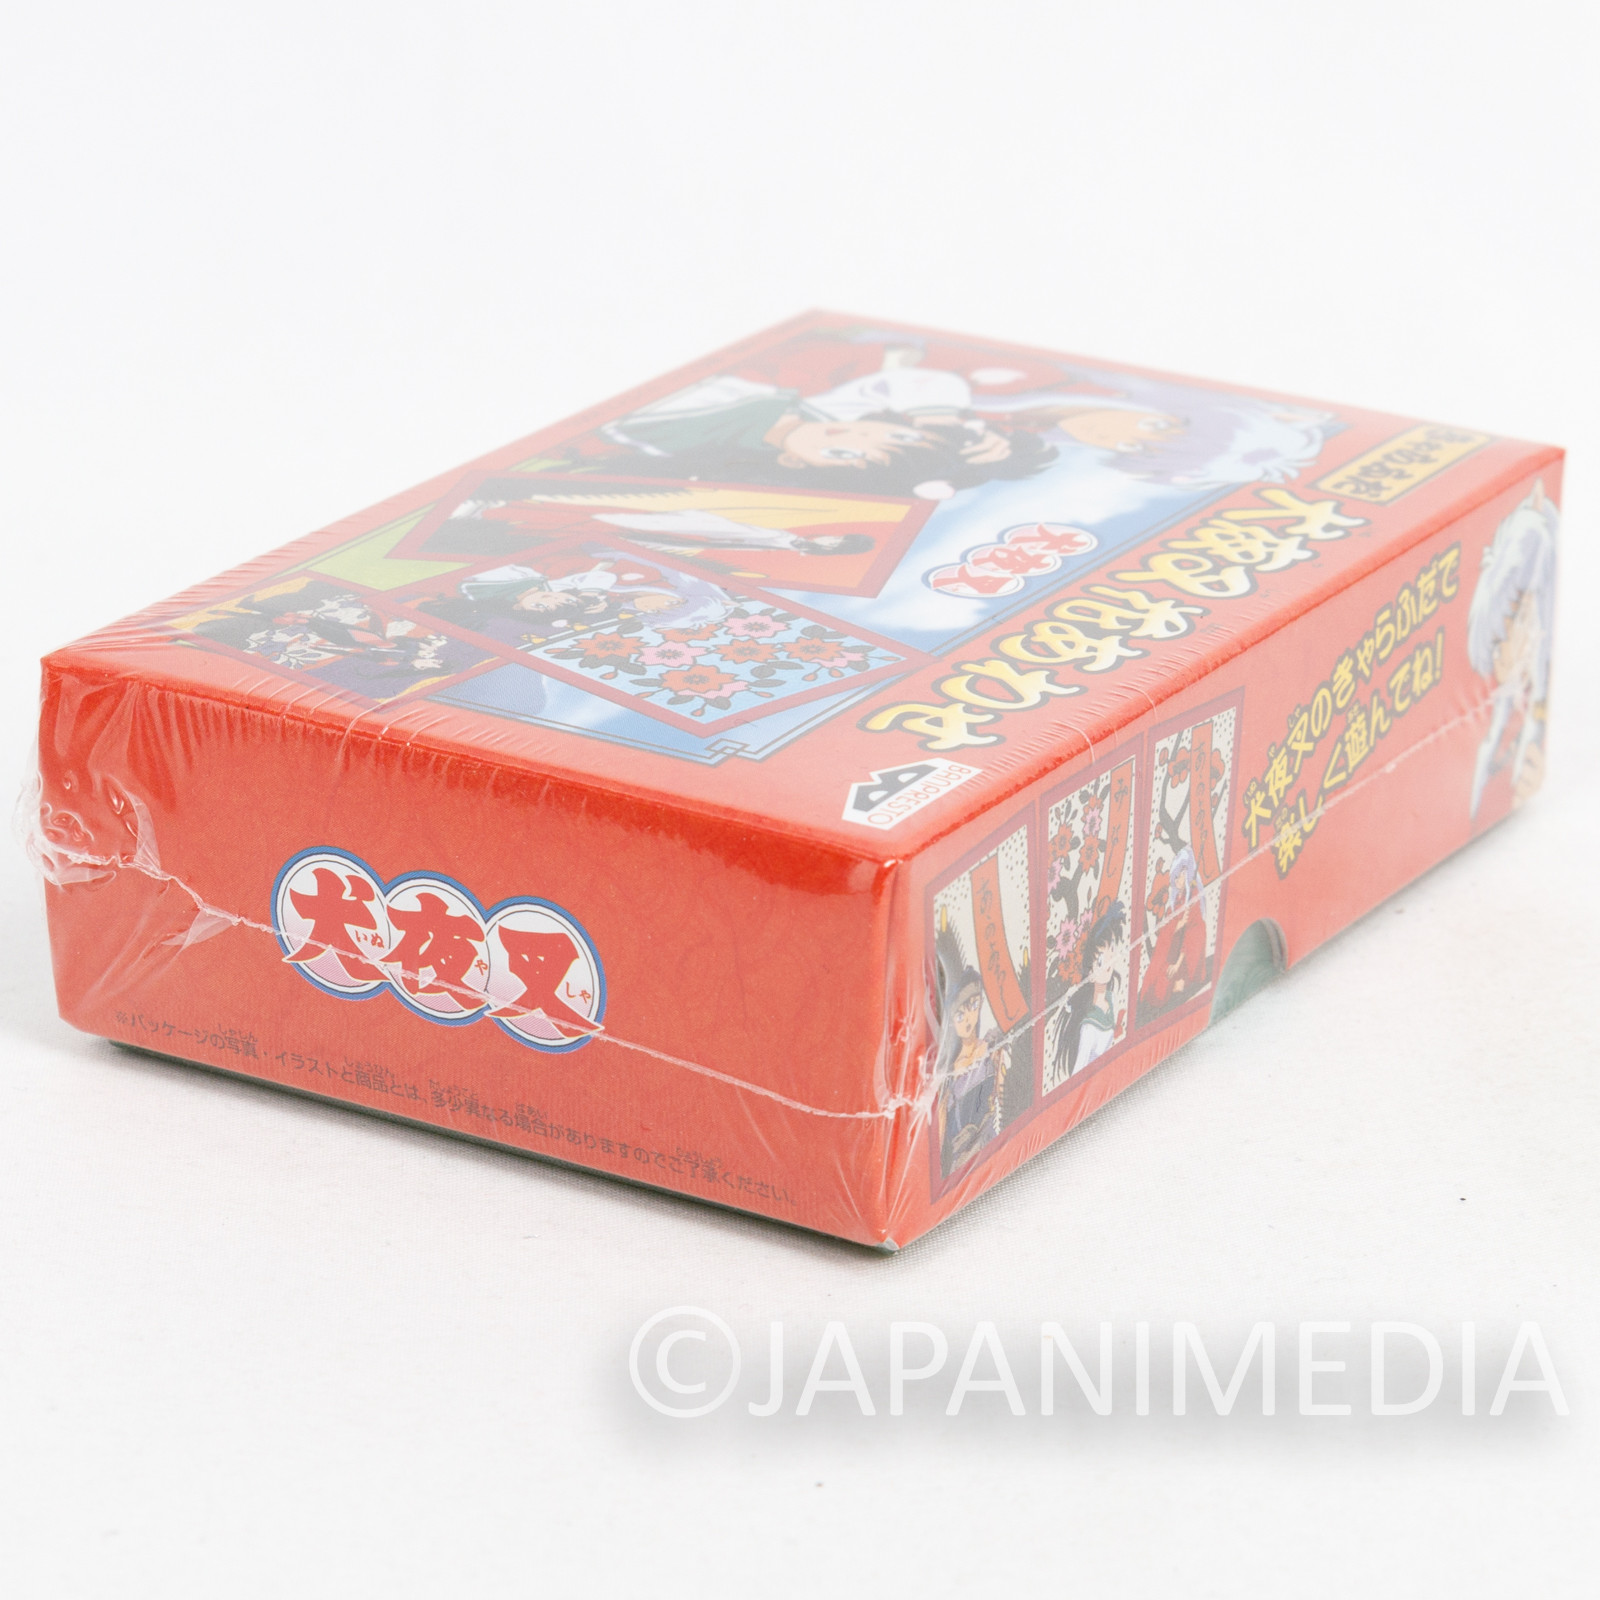 RARE! InuYasha Card Game Charafuda Hanafuda JAPAN ANIME MANGA RUMIKO TAKAHASHI